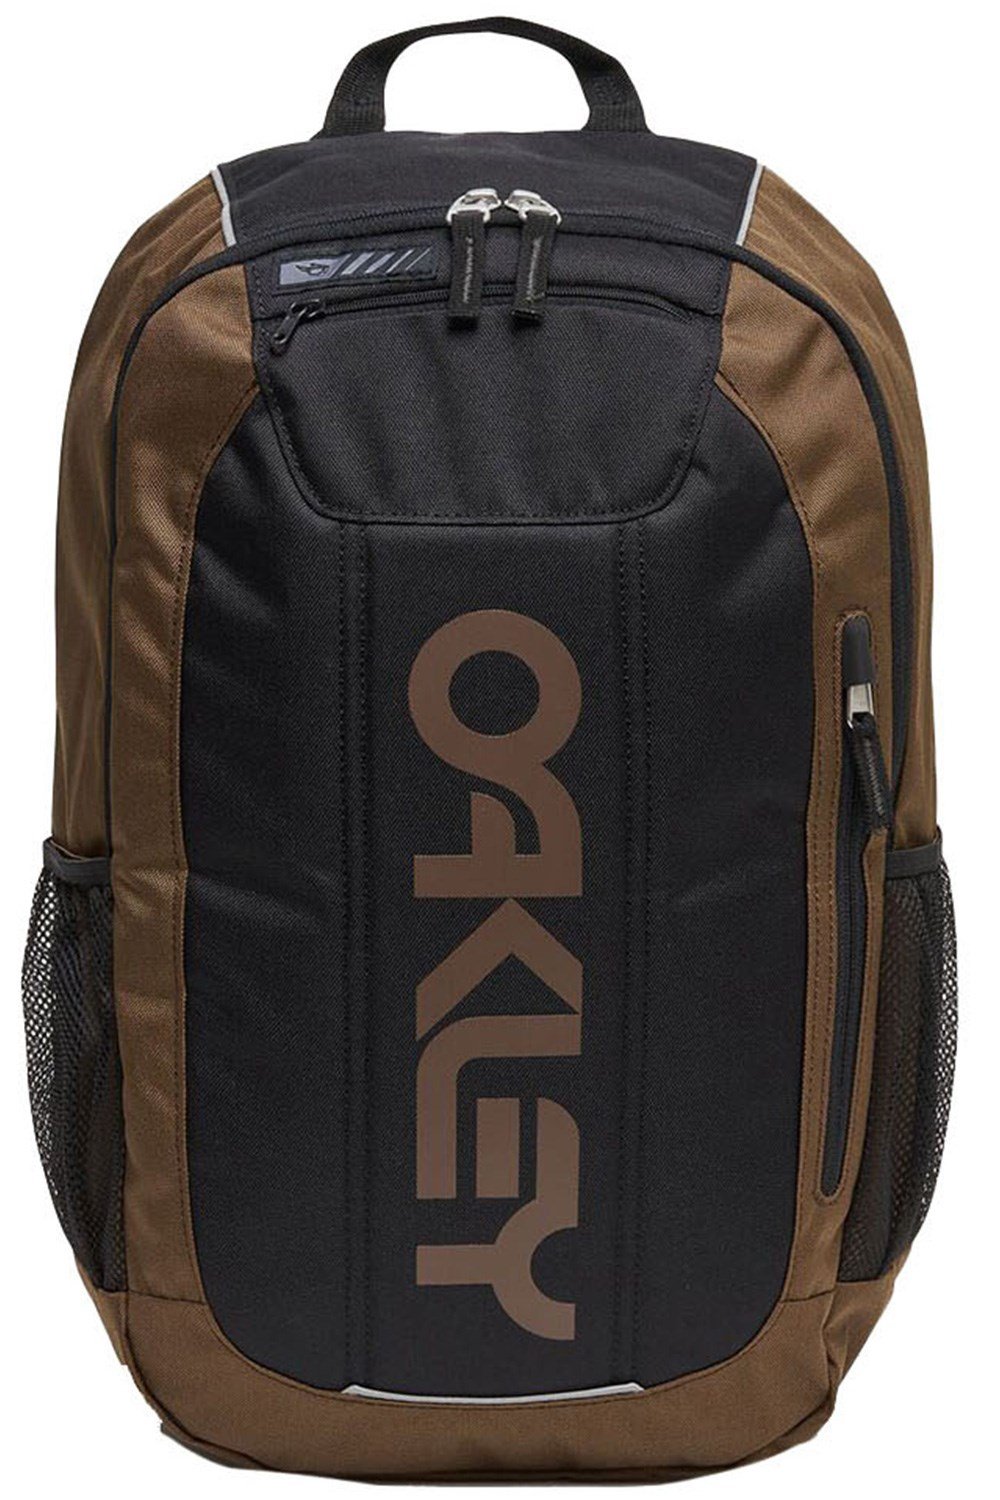 Enduro 20L 3. 0 Backpack -